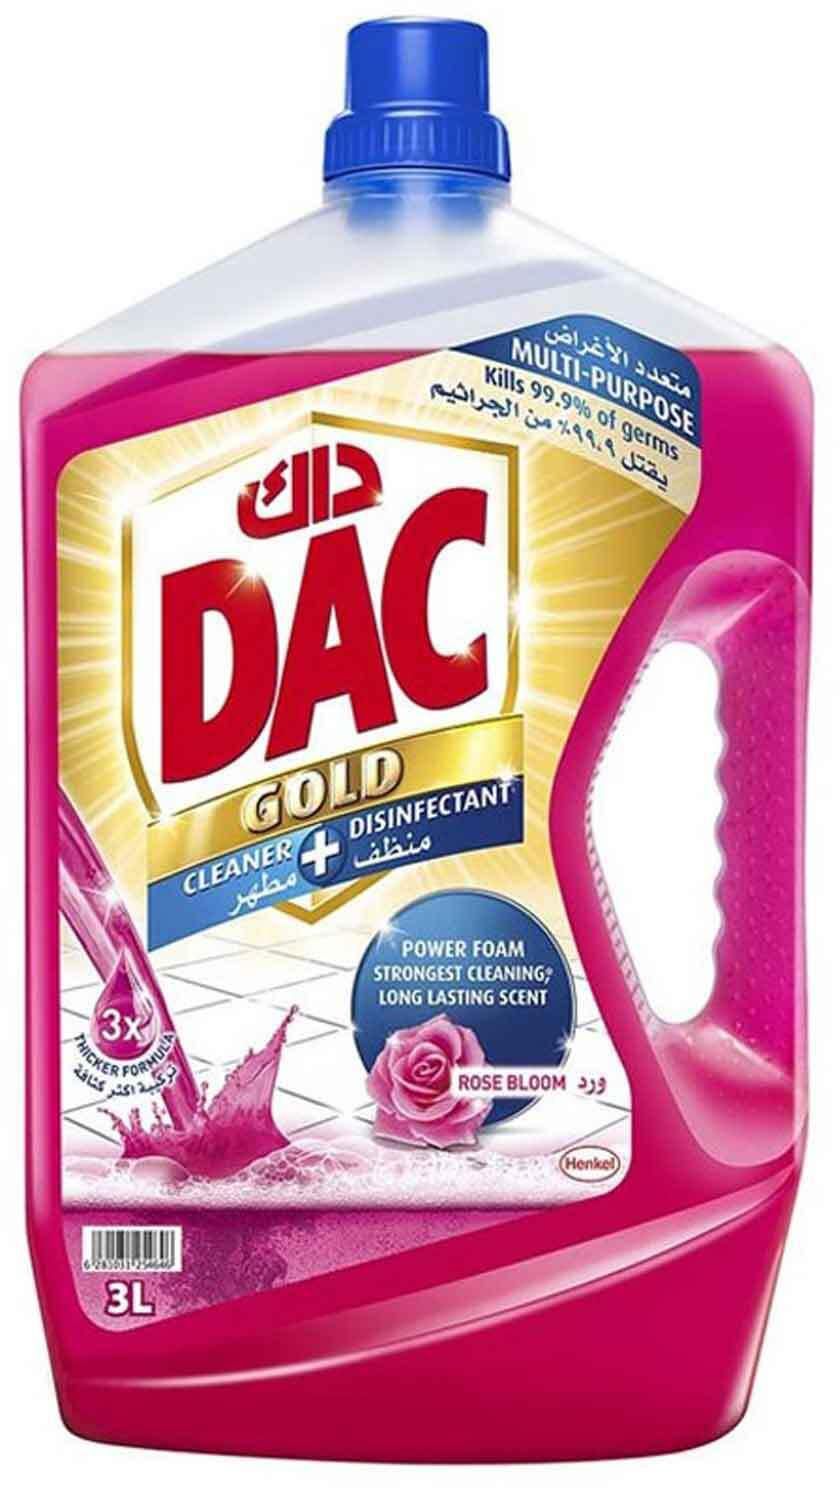 dac gold disinfectant cucas 3L